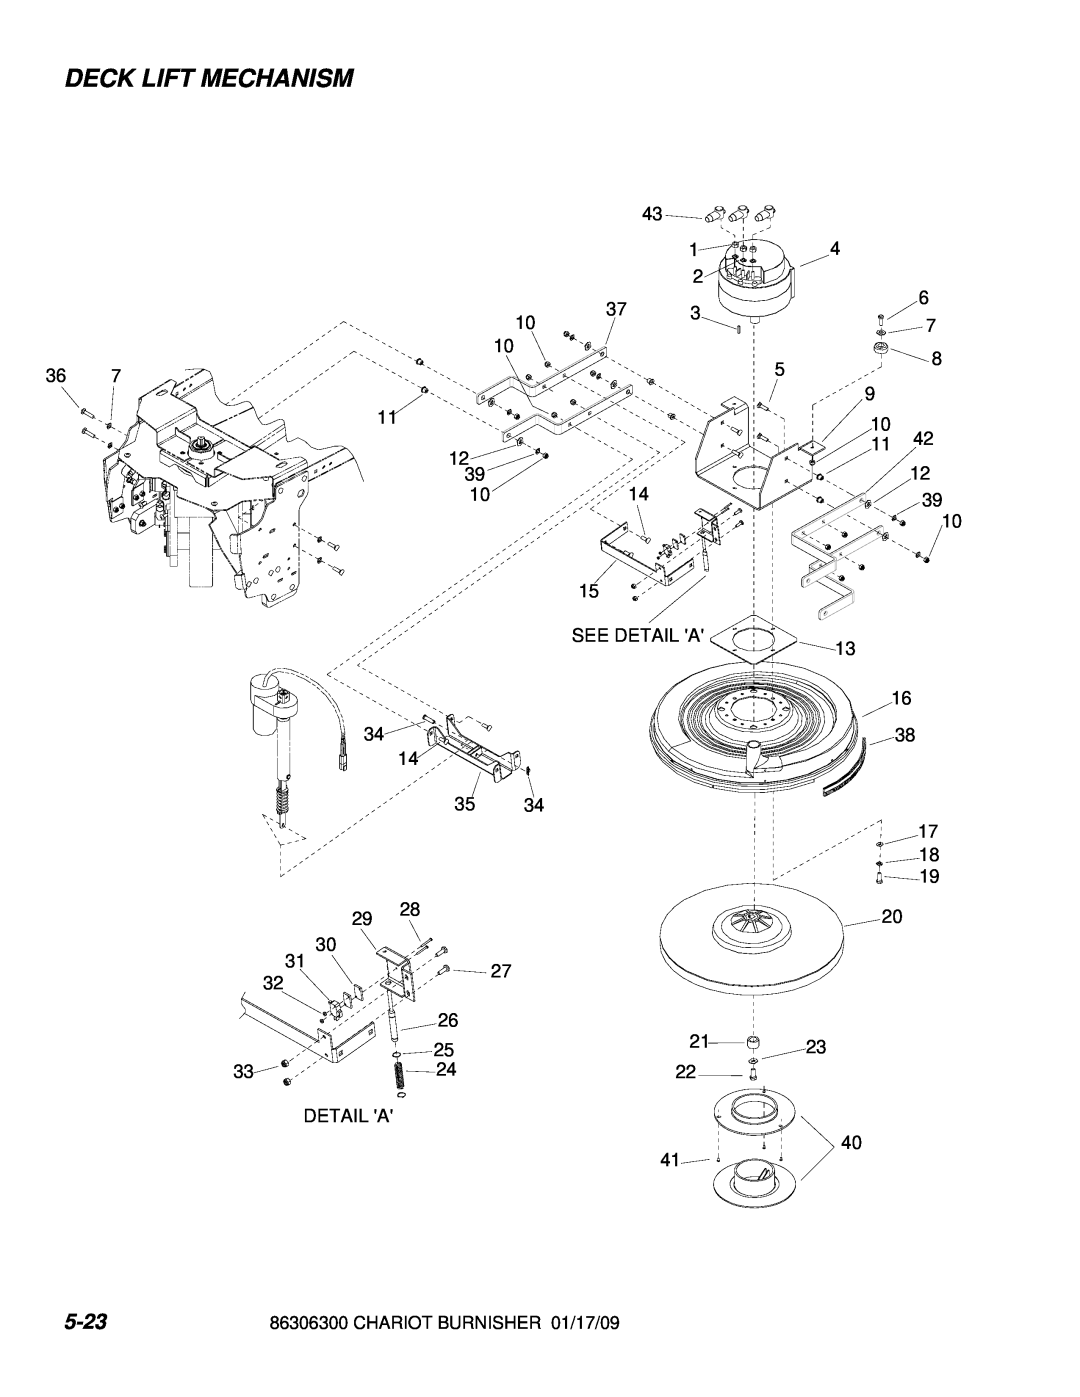 Windsor CBE20, CBCD20, CB20 manual Deck Lift Mechanism, 5-23 